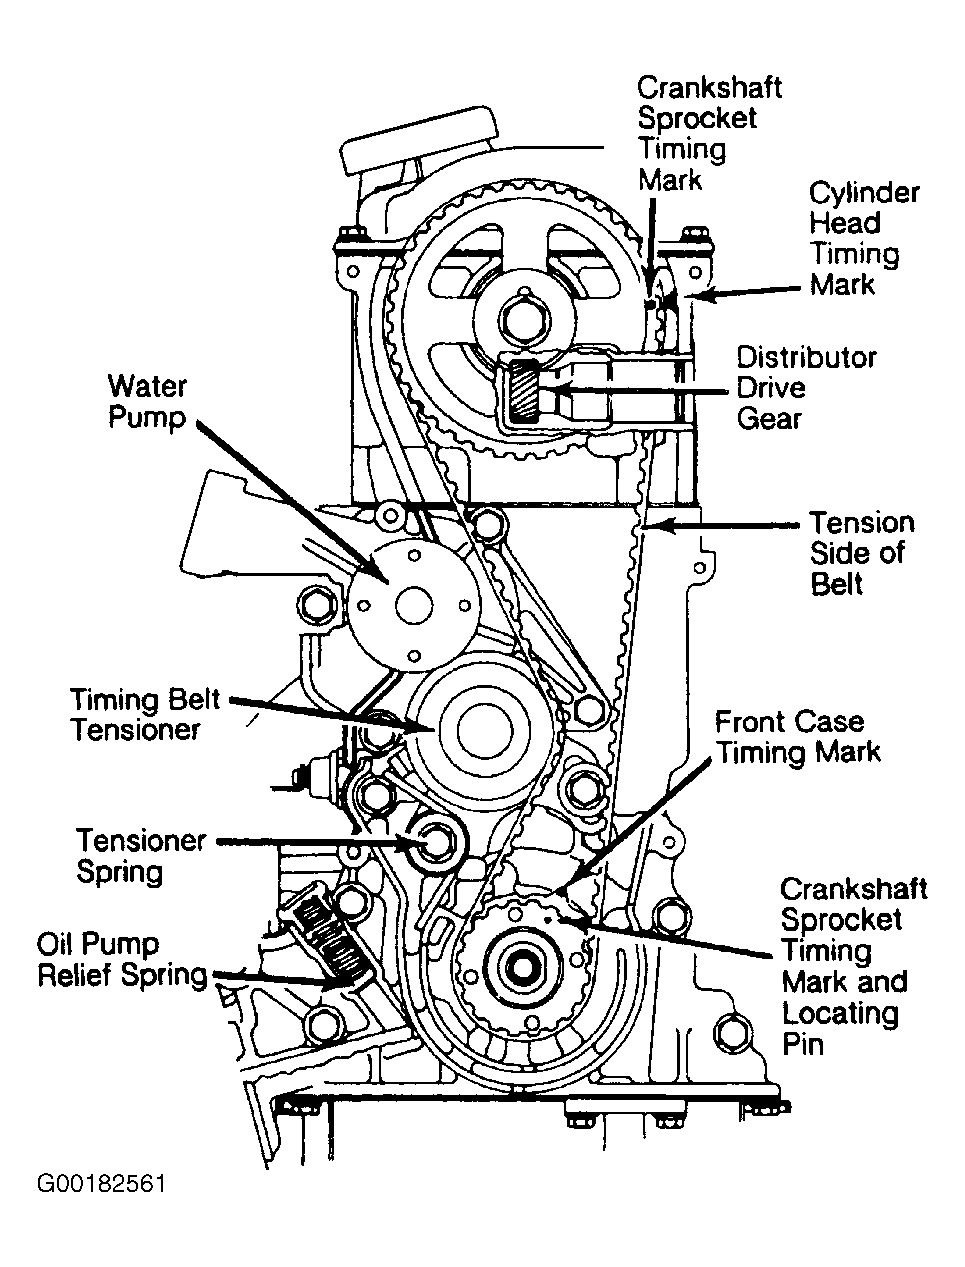 1984 Dodge Colt Serpentine Belt Routing And Timing Belt Diagrams